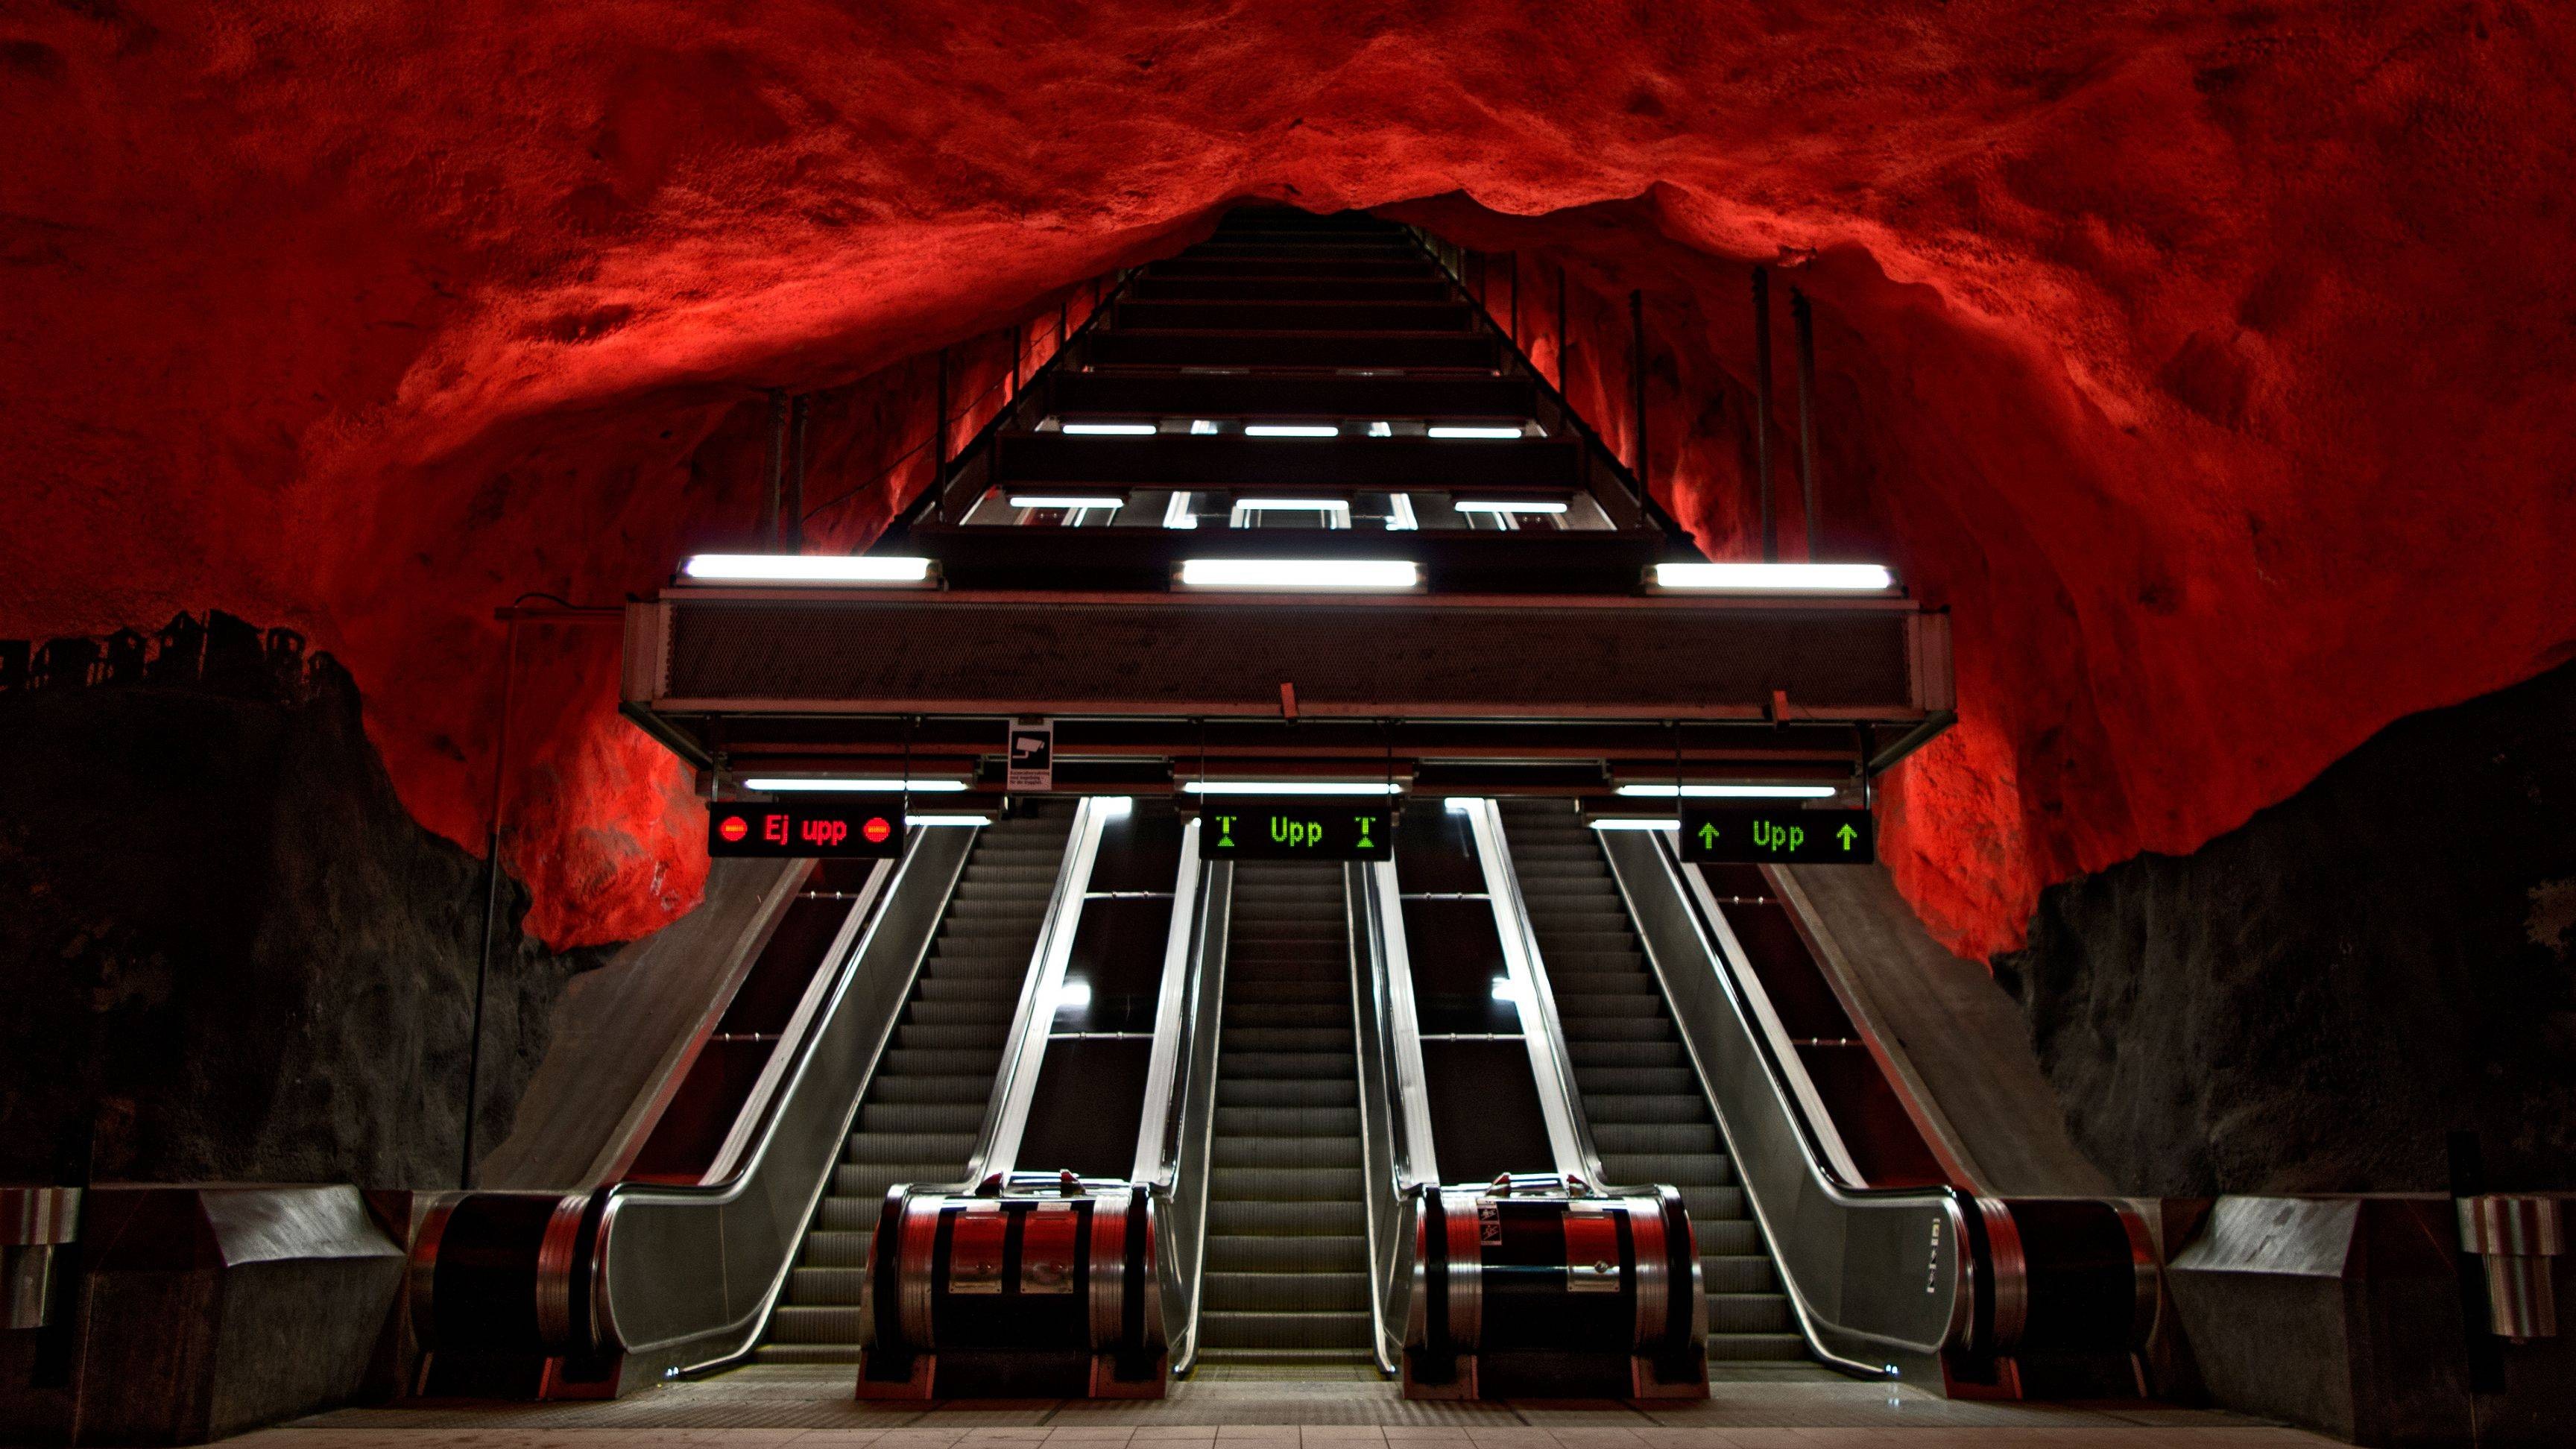 General 3456x1944 escalator Stockholm Sweden subway tunnel underground cave train station Stockholm metro red Solna Centrum